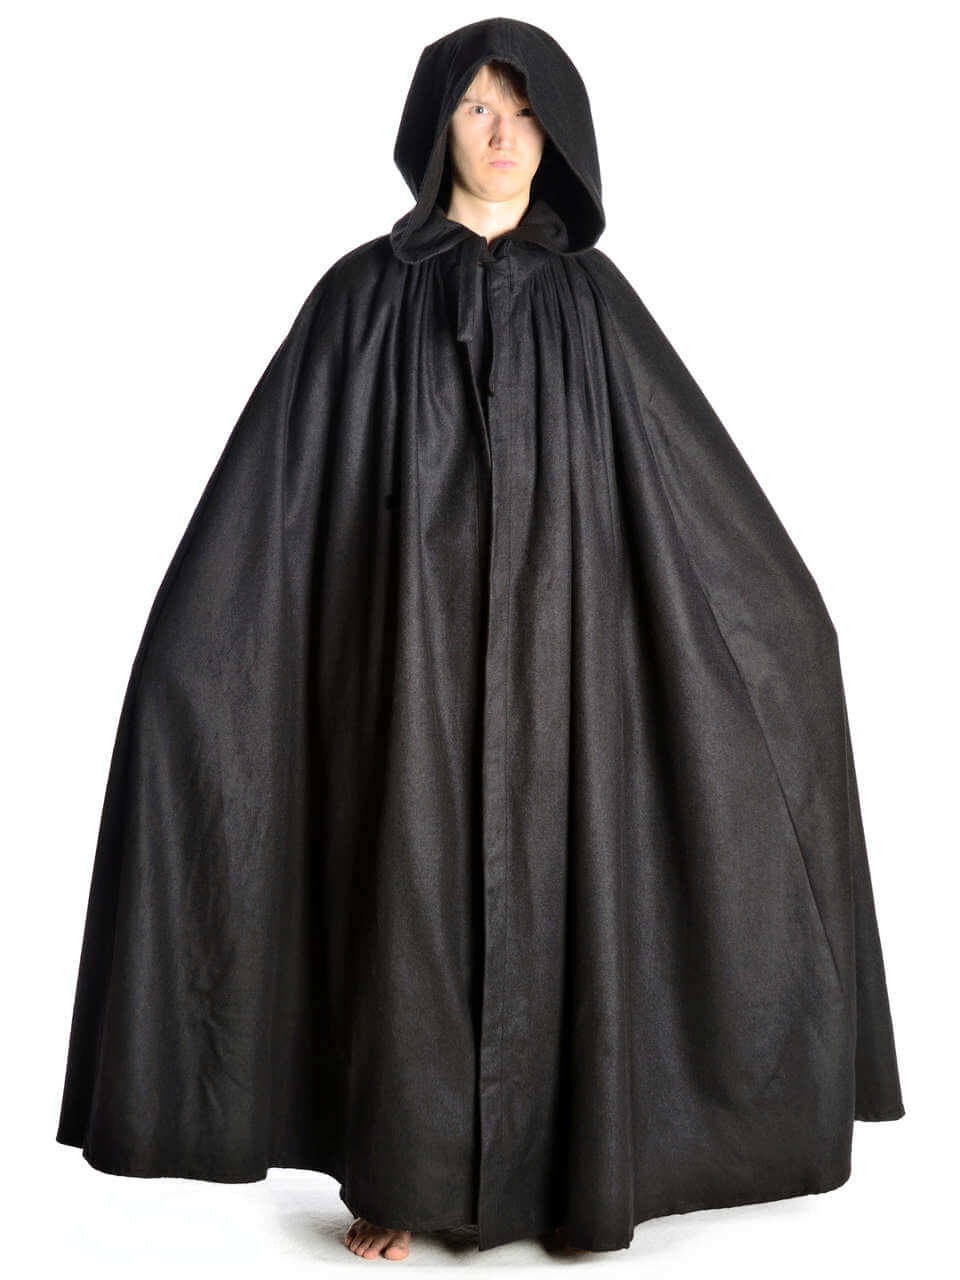 Medieval Cloak Favian for Children, black